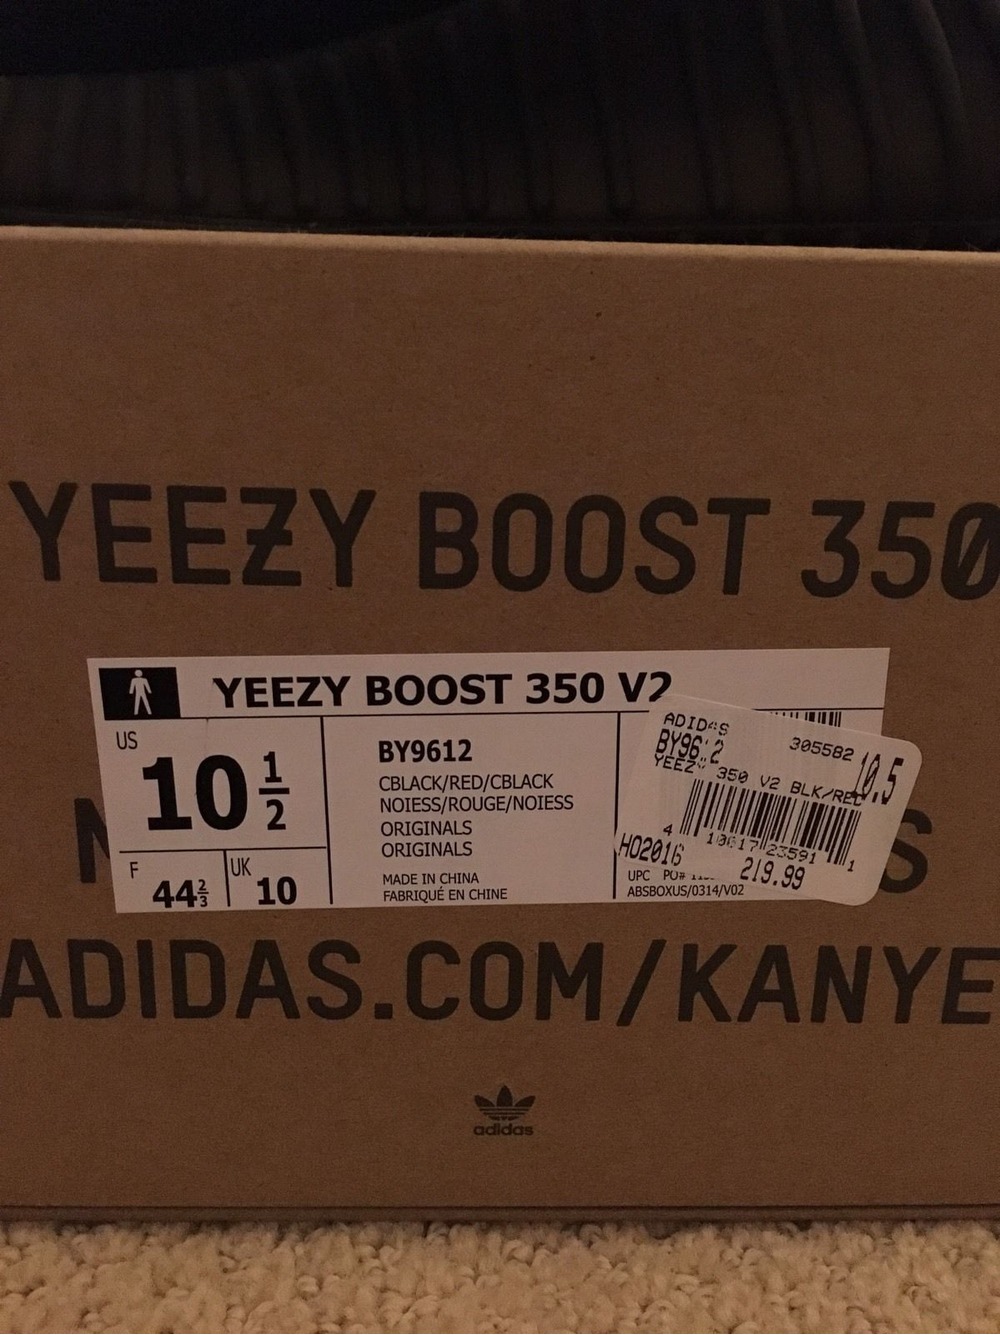 Adidas Originals X Kanye West Yeezy Boost 350 v2 CP 9654 Zebra Sz